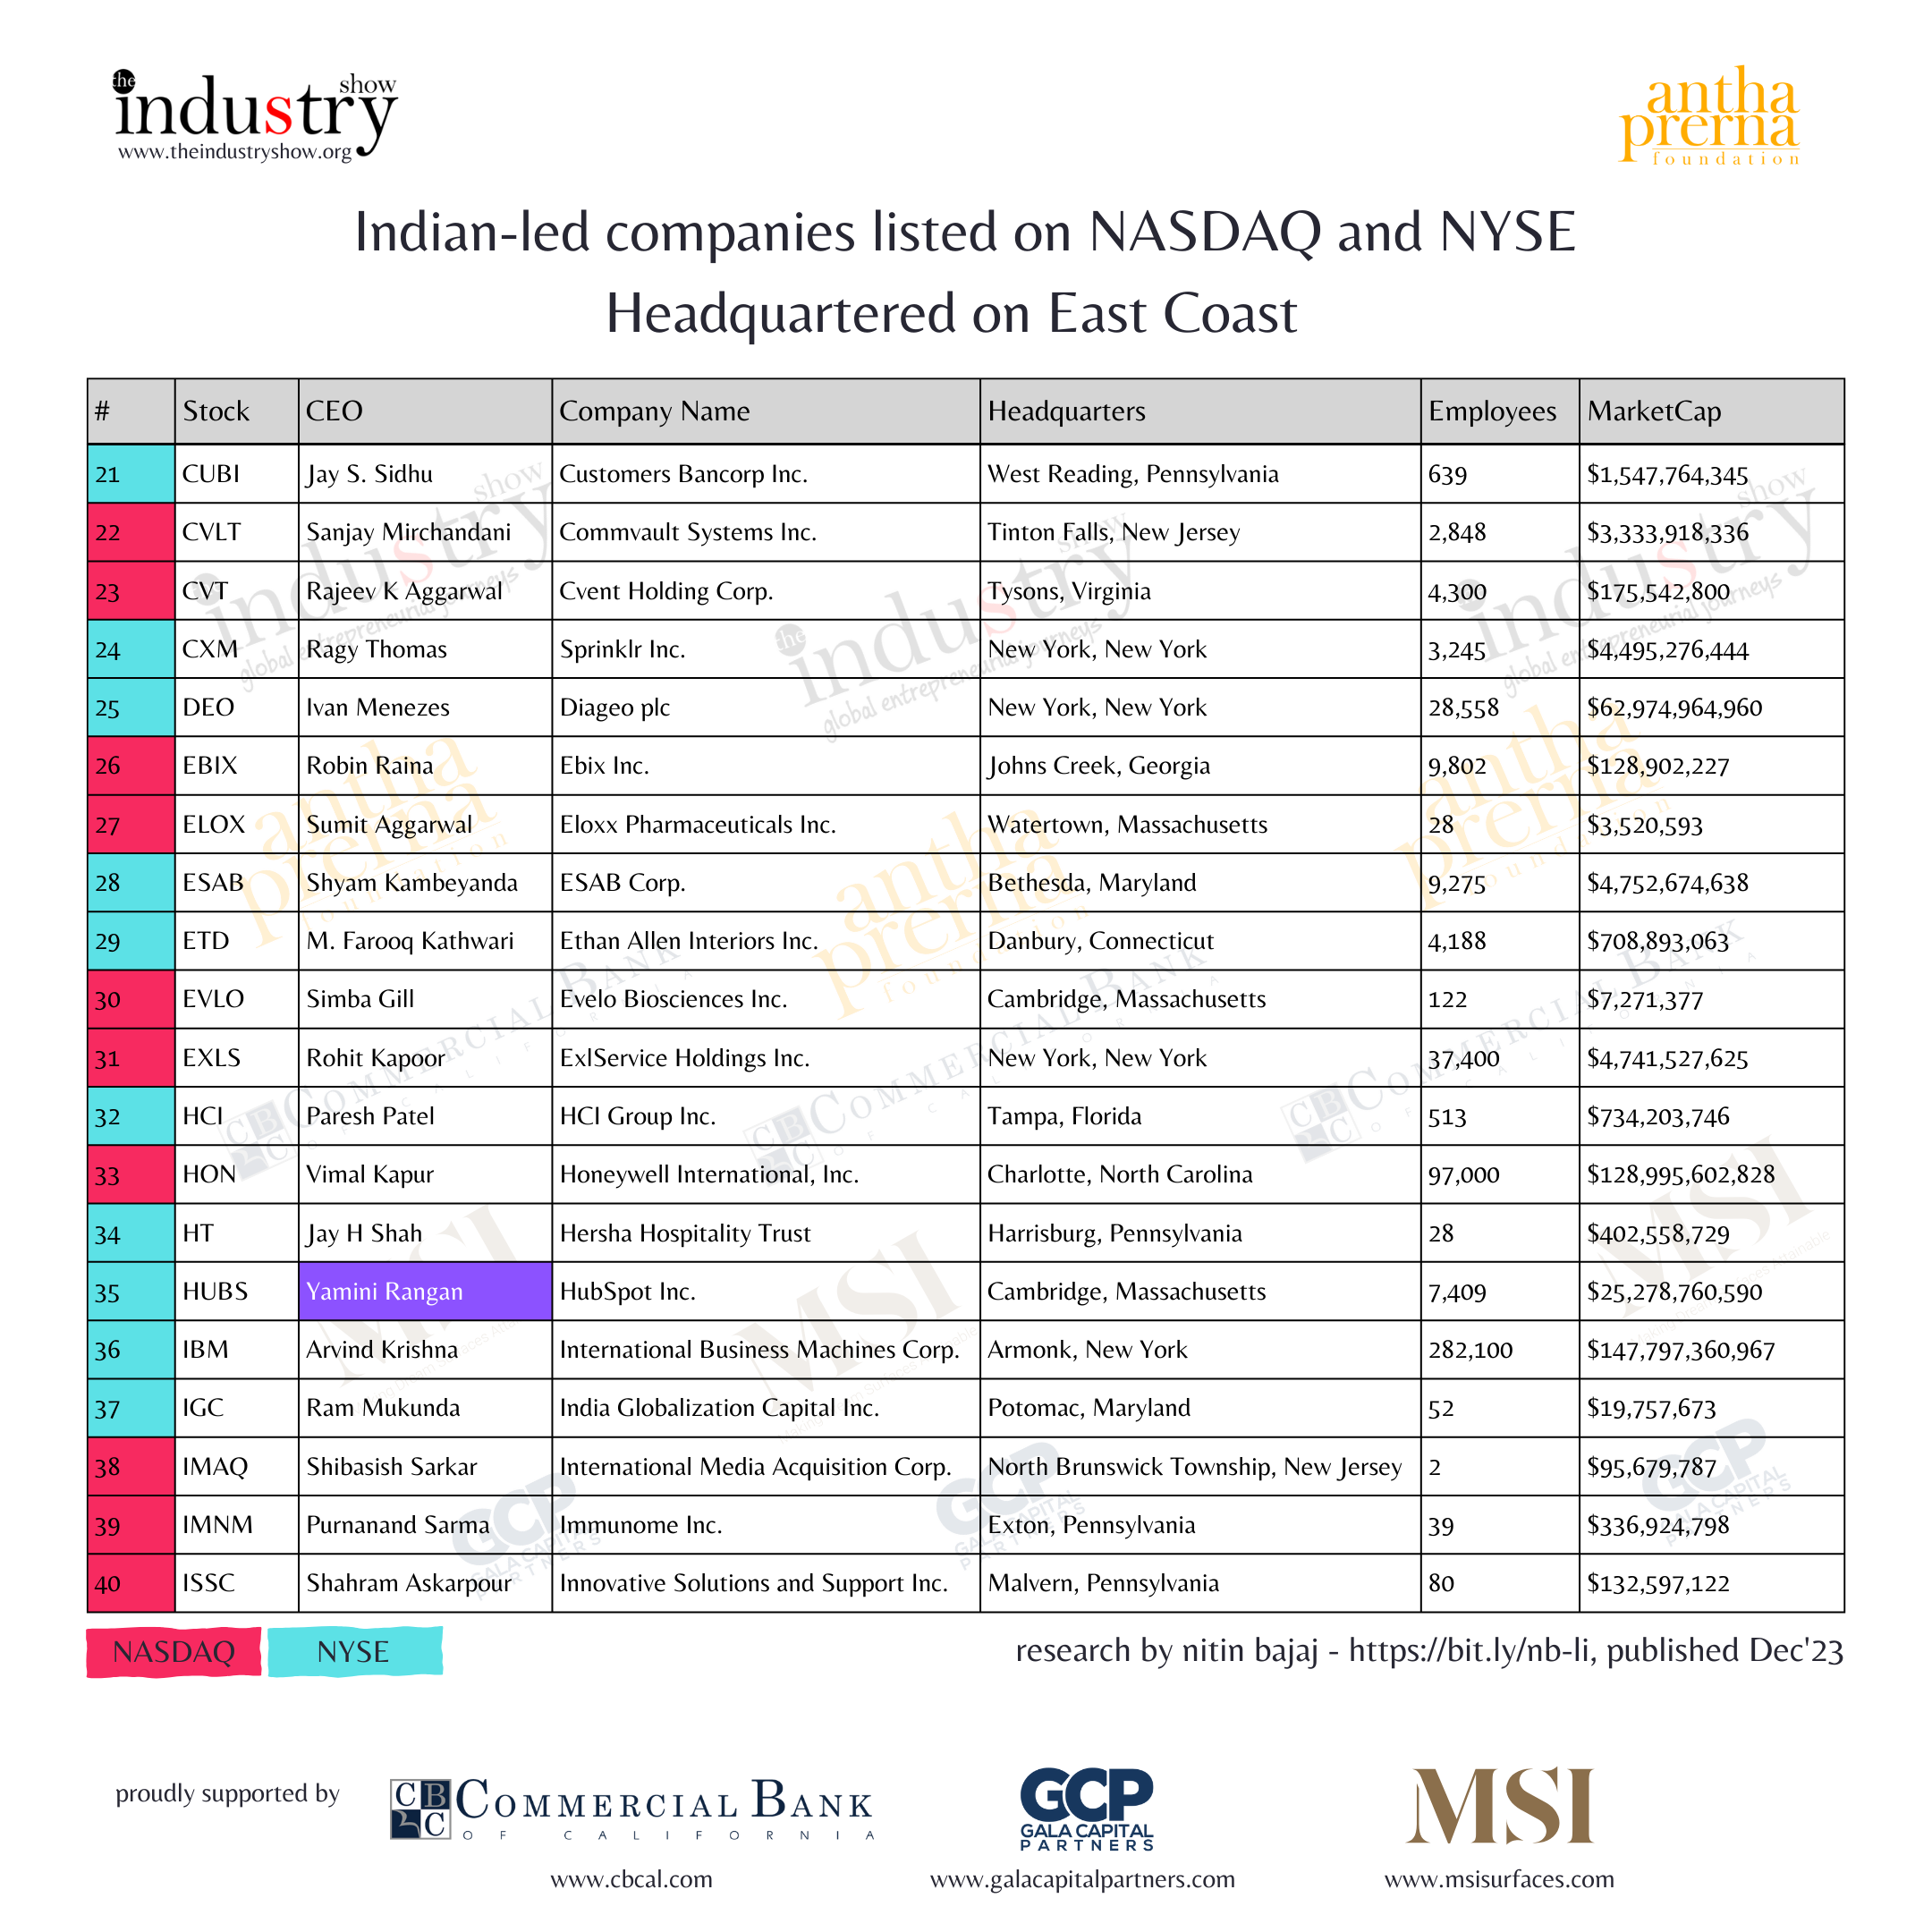 Indian-led companies listed on NASDAQ and NYSE Headquartered on East Coast